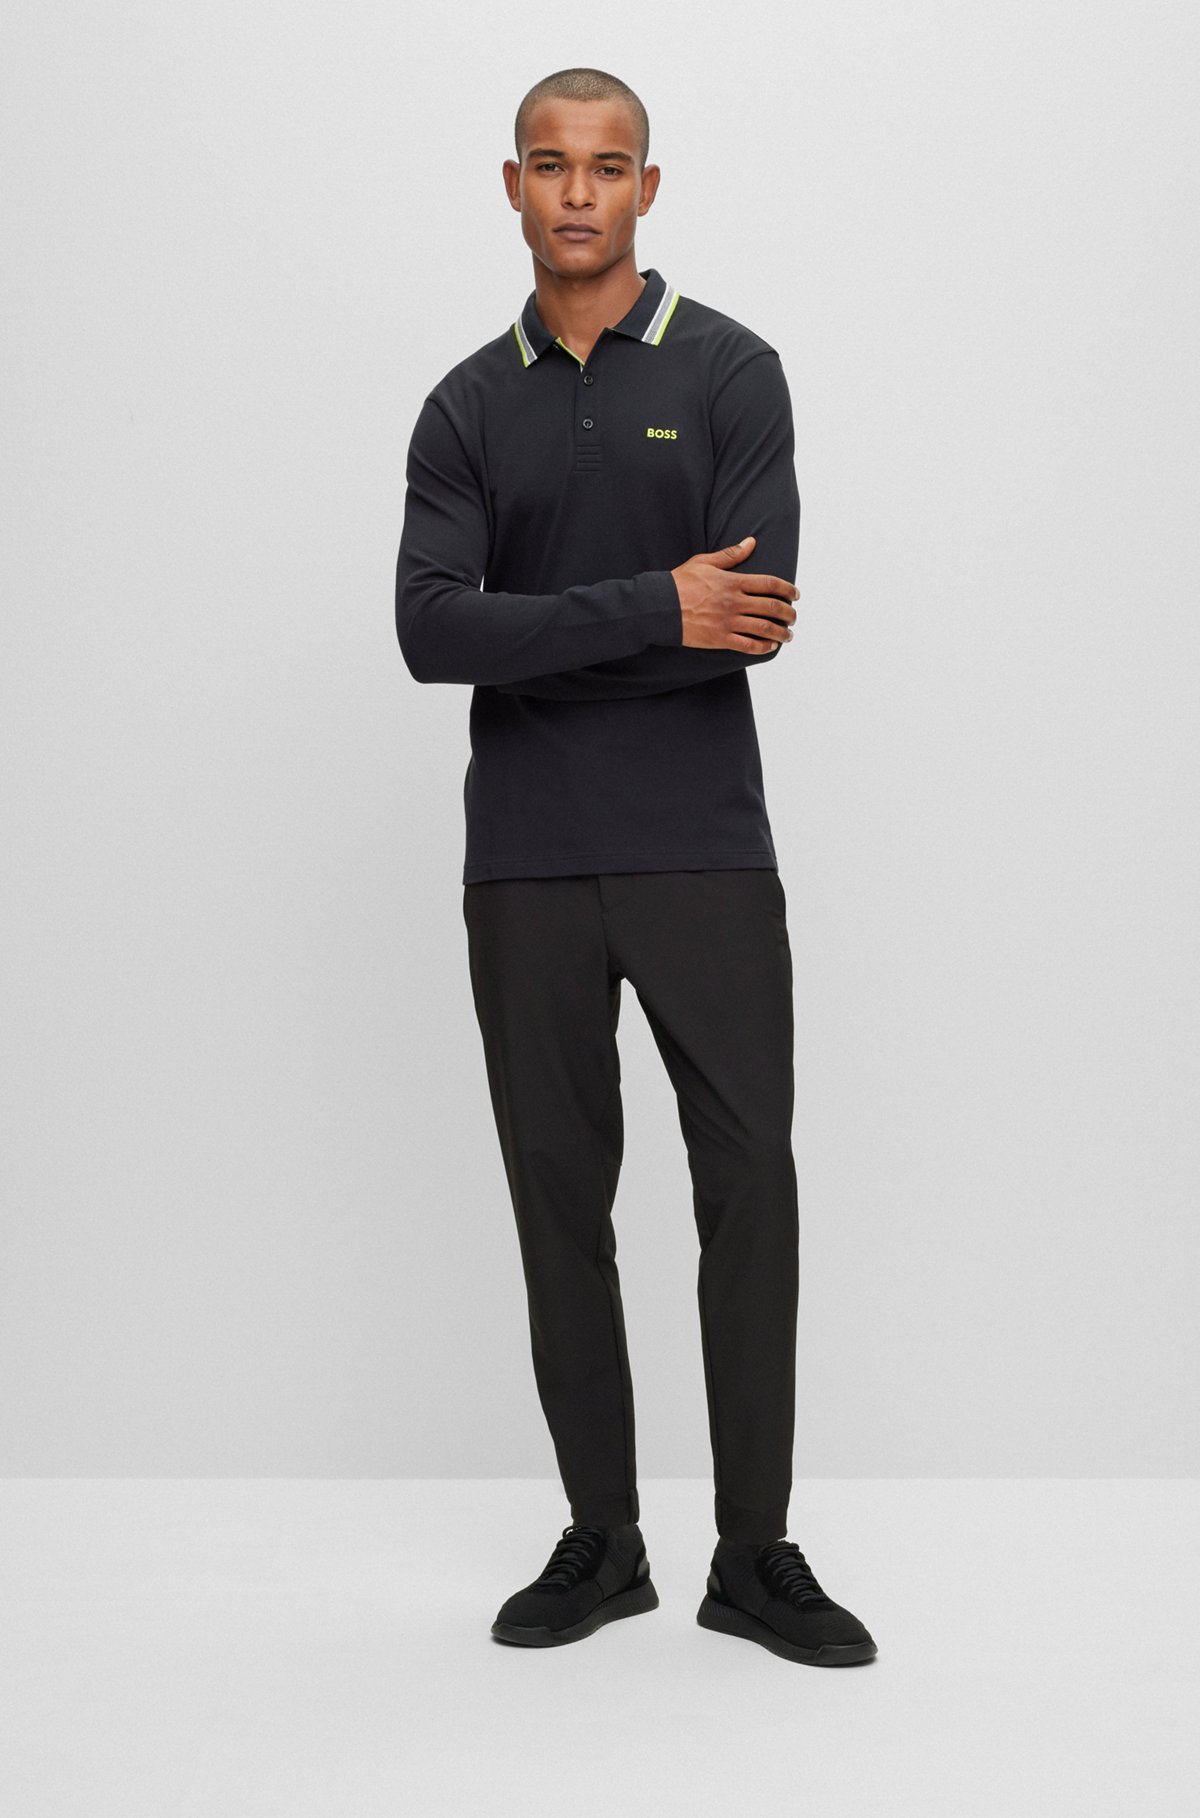 Long-sleeved cotton-piqué polo shirt with contrast logo, Black